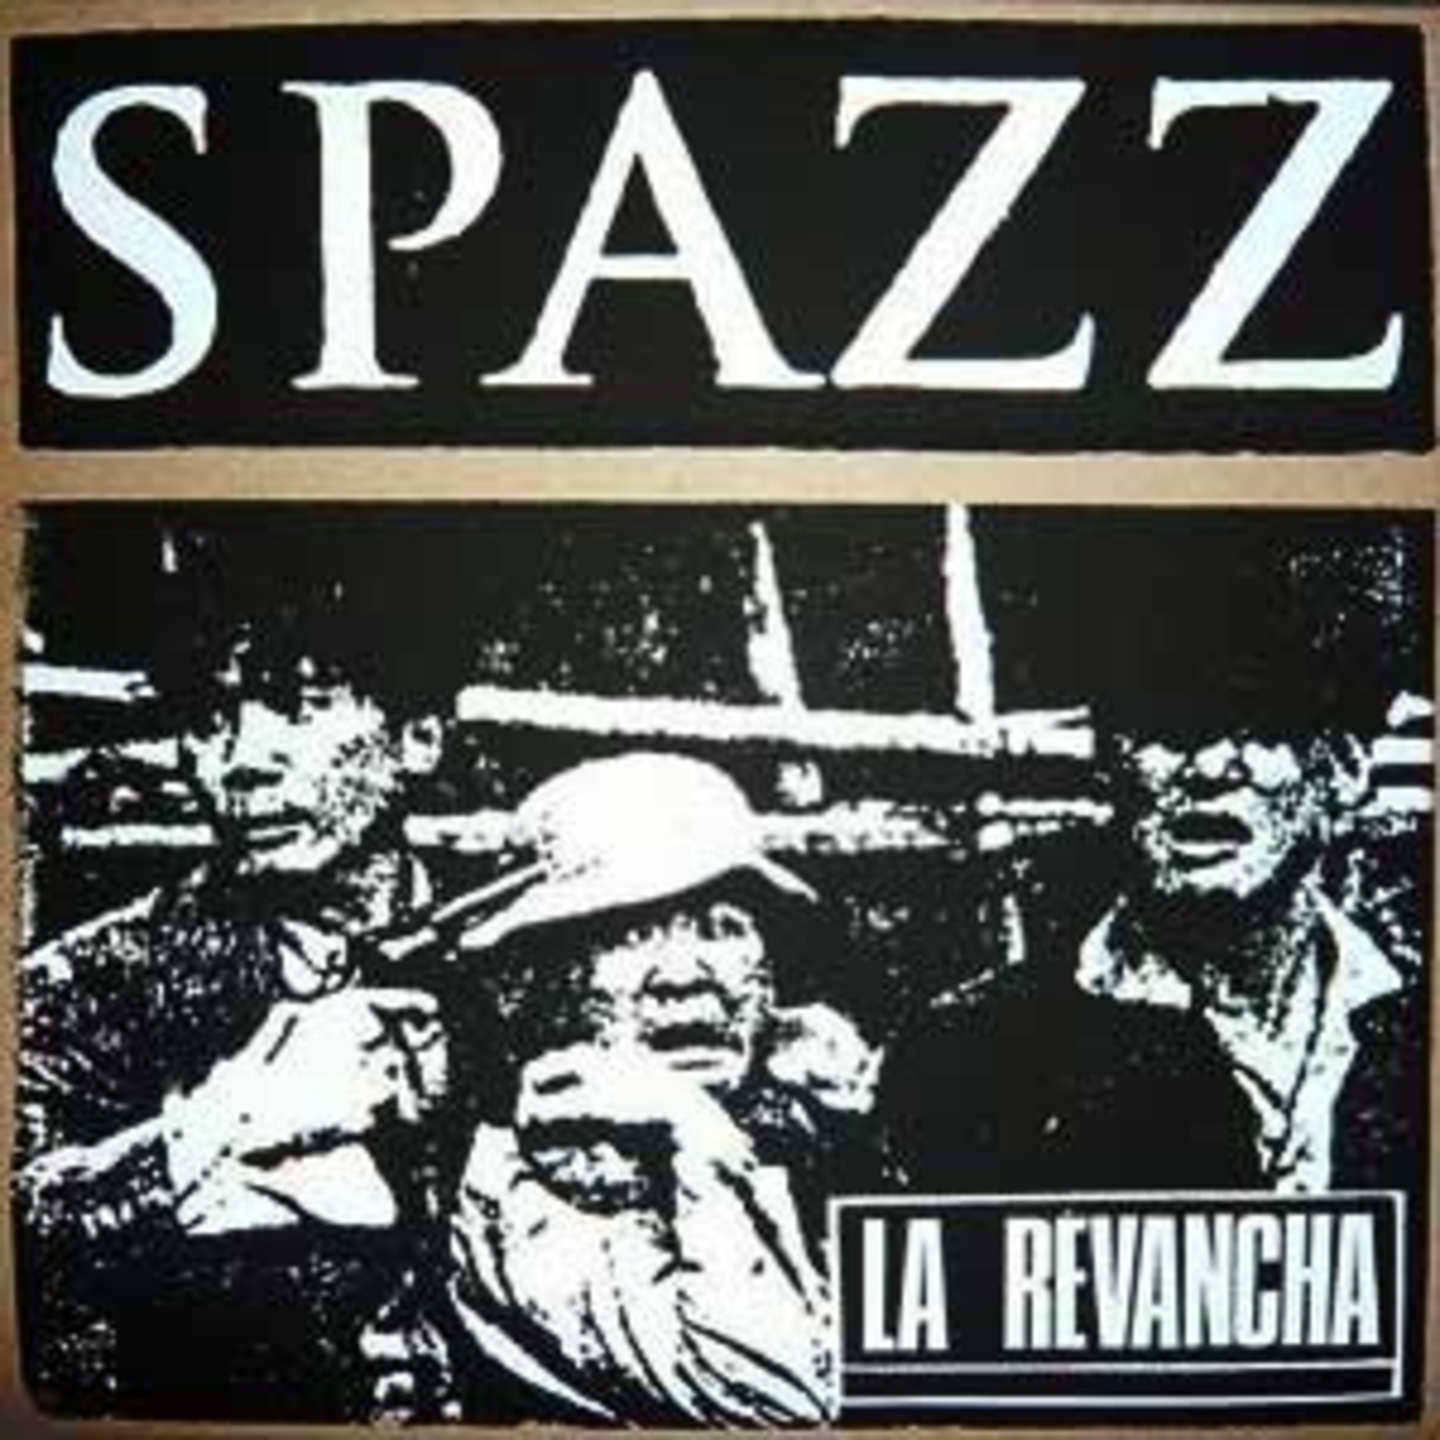 SPAZZ - La Revancha LP